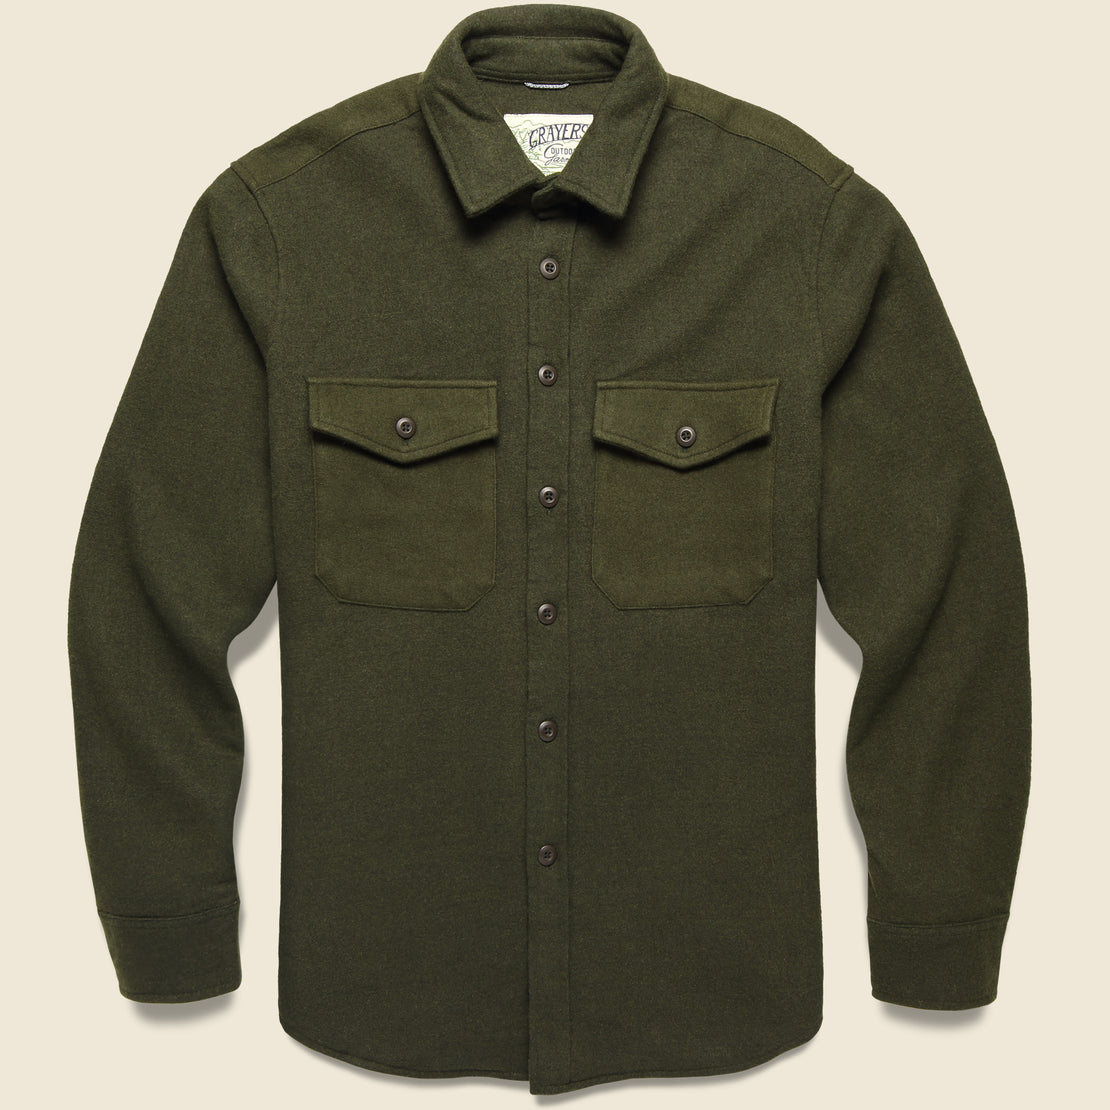 Grayers Surplus Wool Overshirt - Olive Loden